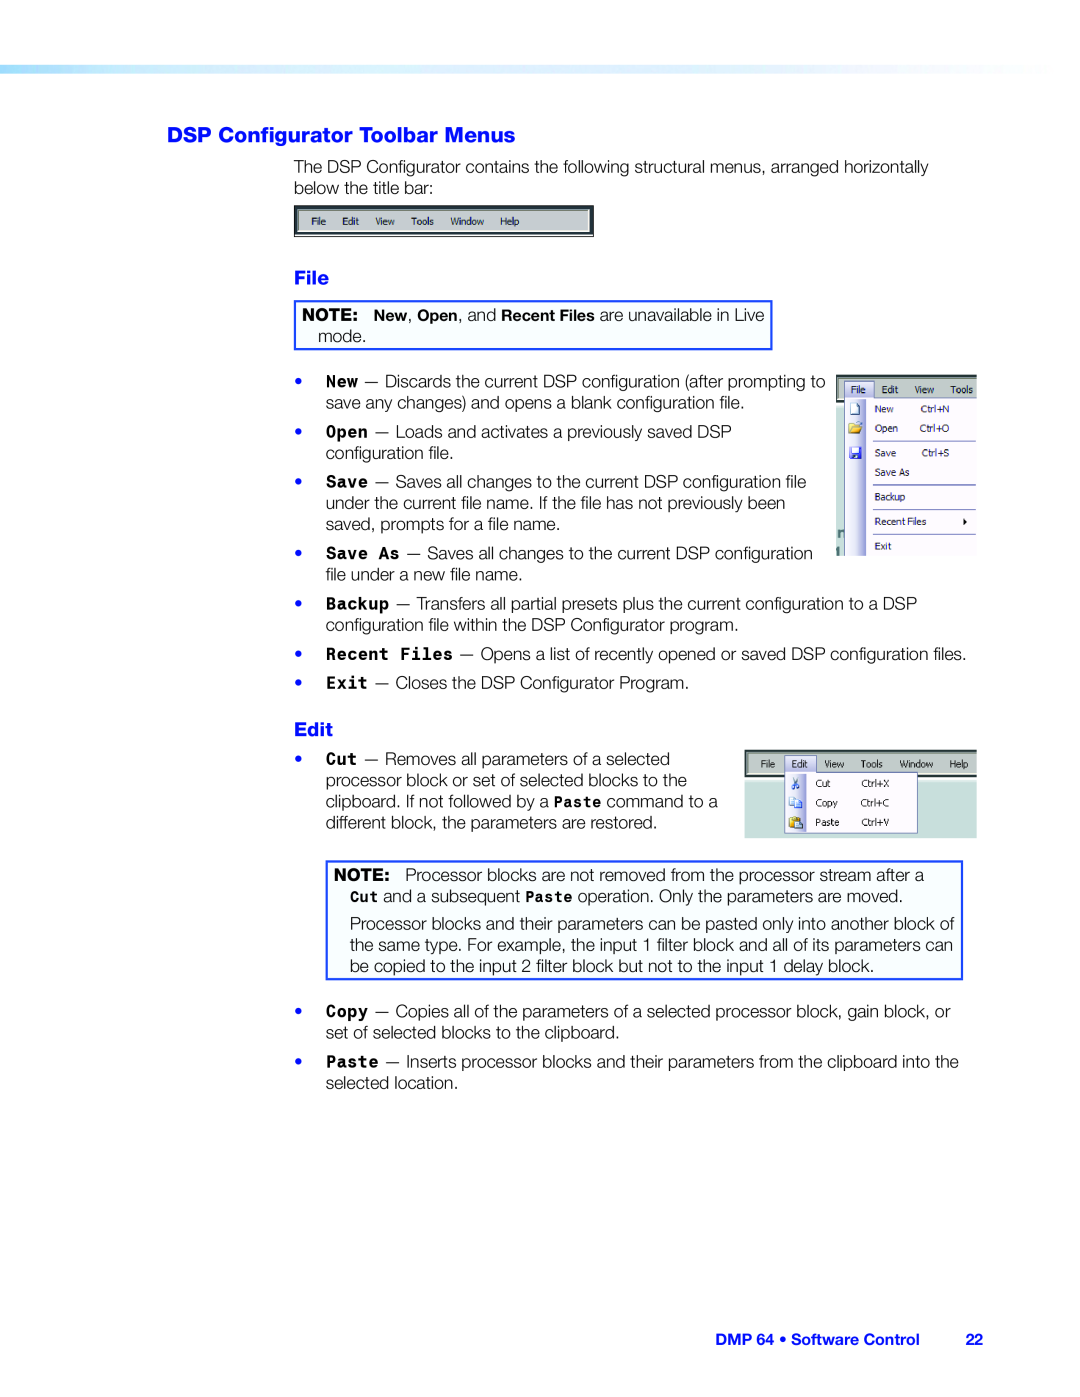 Extron electronic DMP 64 manual DSP Configurator Toolbar Menus, File, Edit 